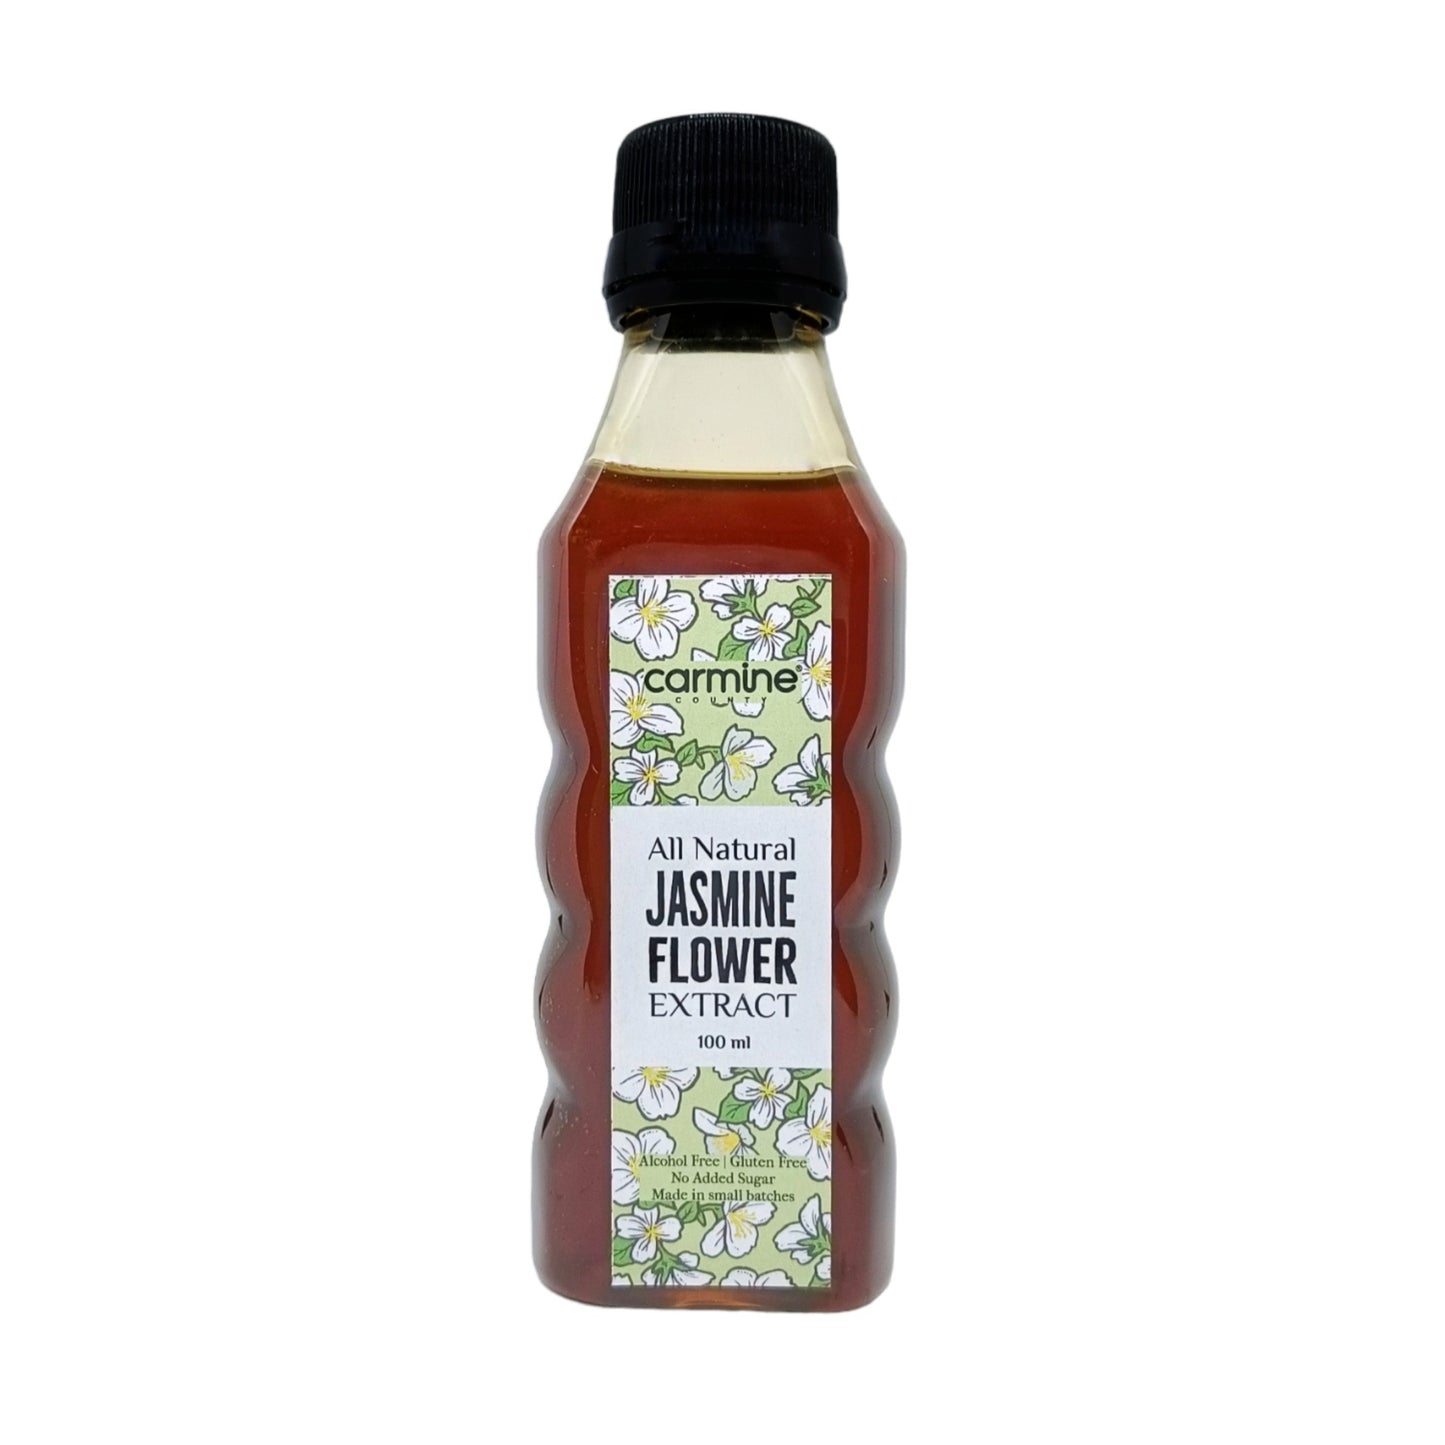 Carmine County All Natural Jasmine Flower Extract 100 ml